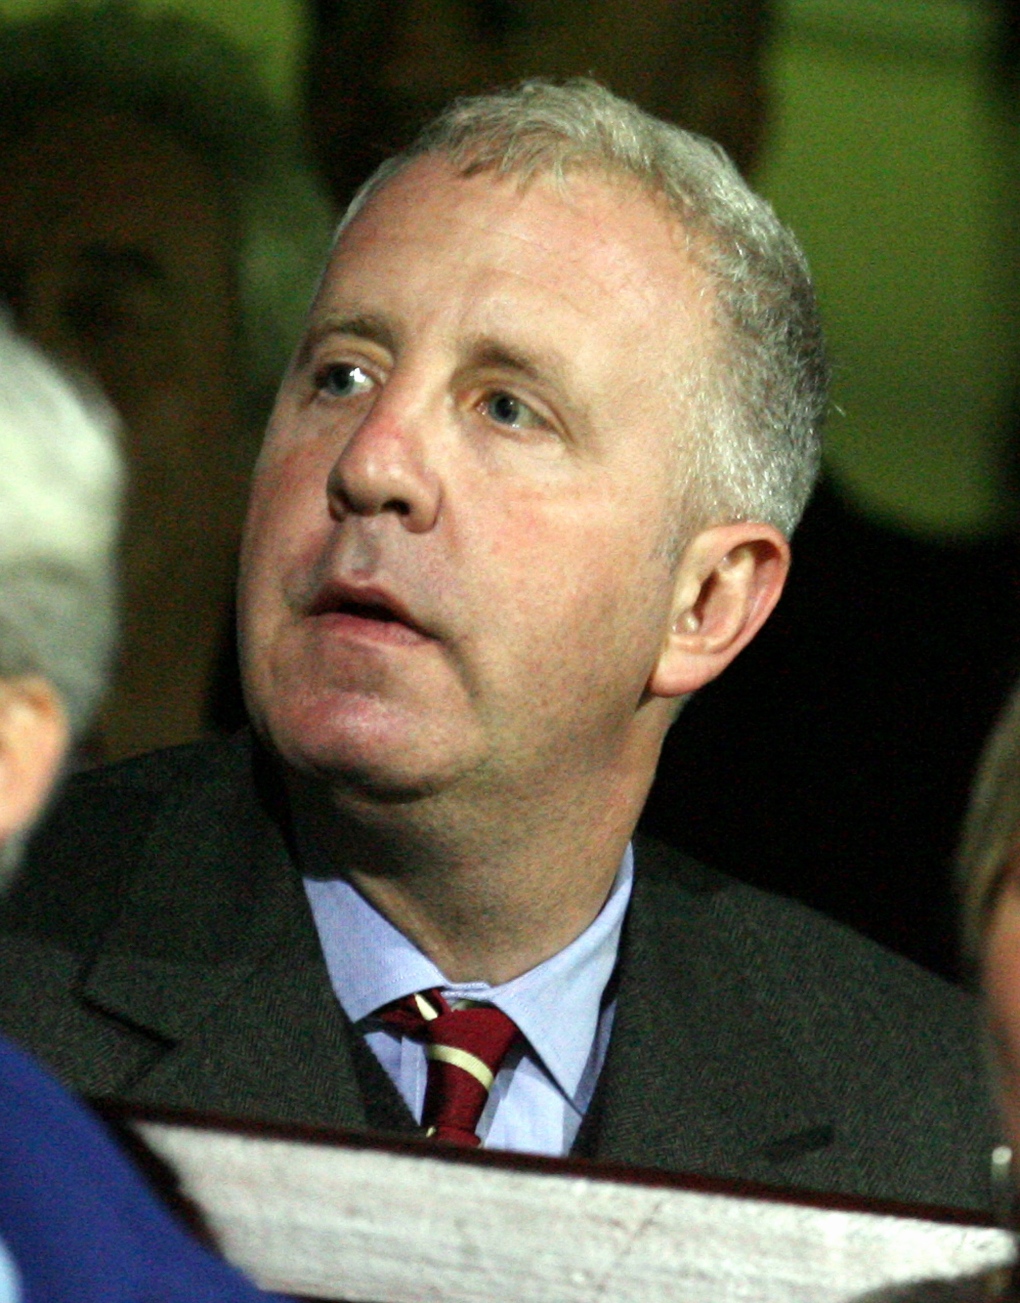 Aston Villa owner Randy Lerner watches his team